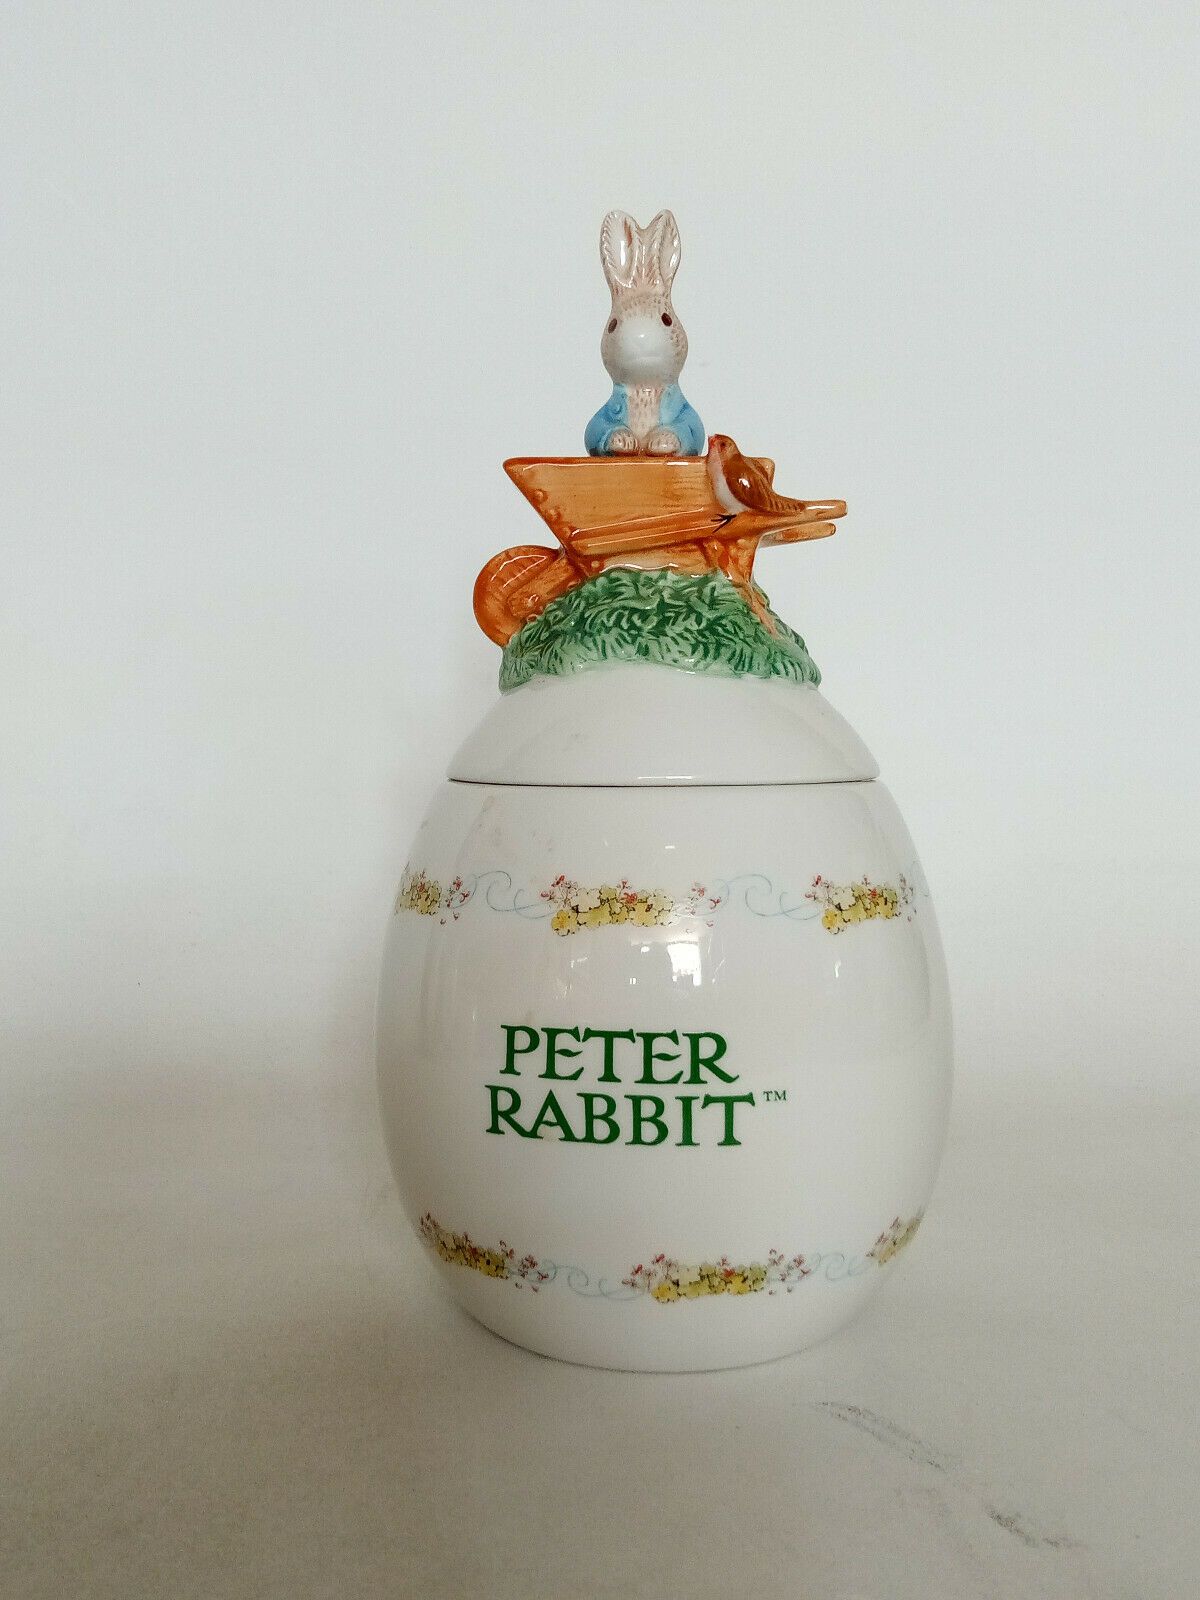 Peter Rabbit Cookie/Candy Jar by Helen Beatrix Potter